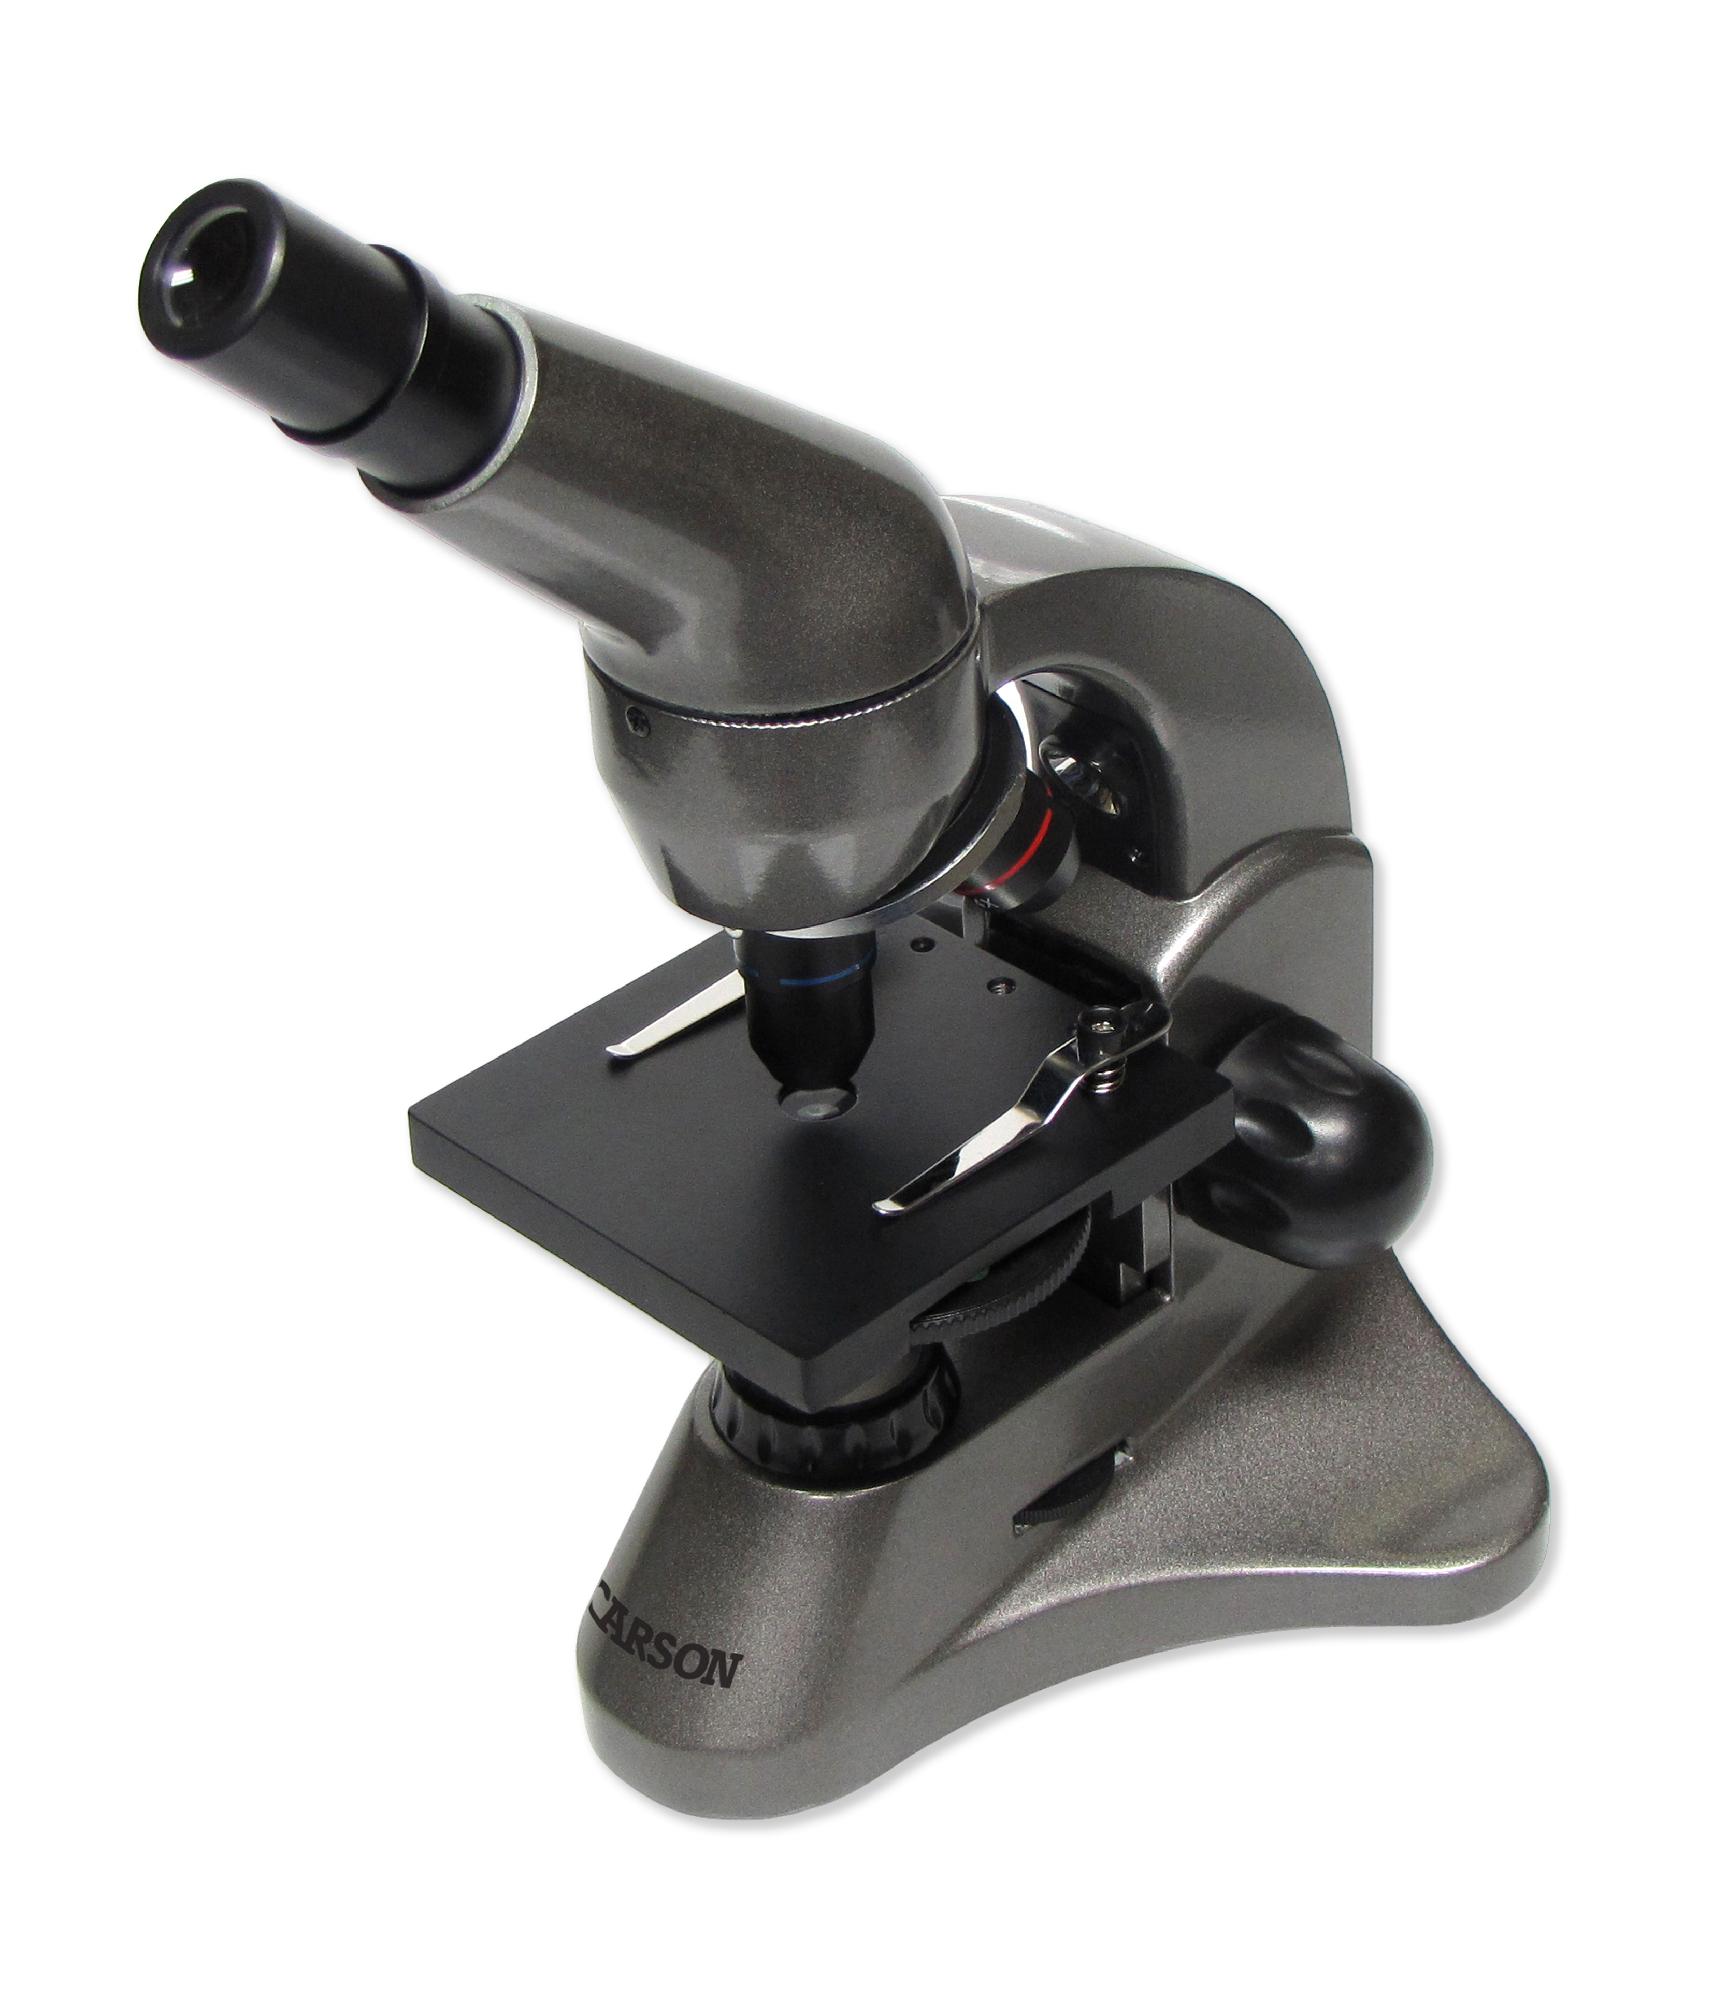 Carson Optical Microscope - MS-040